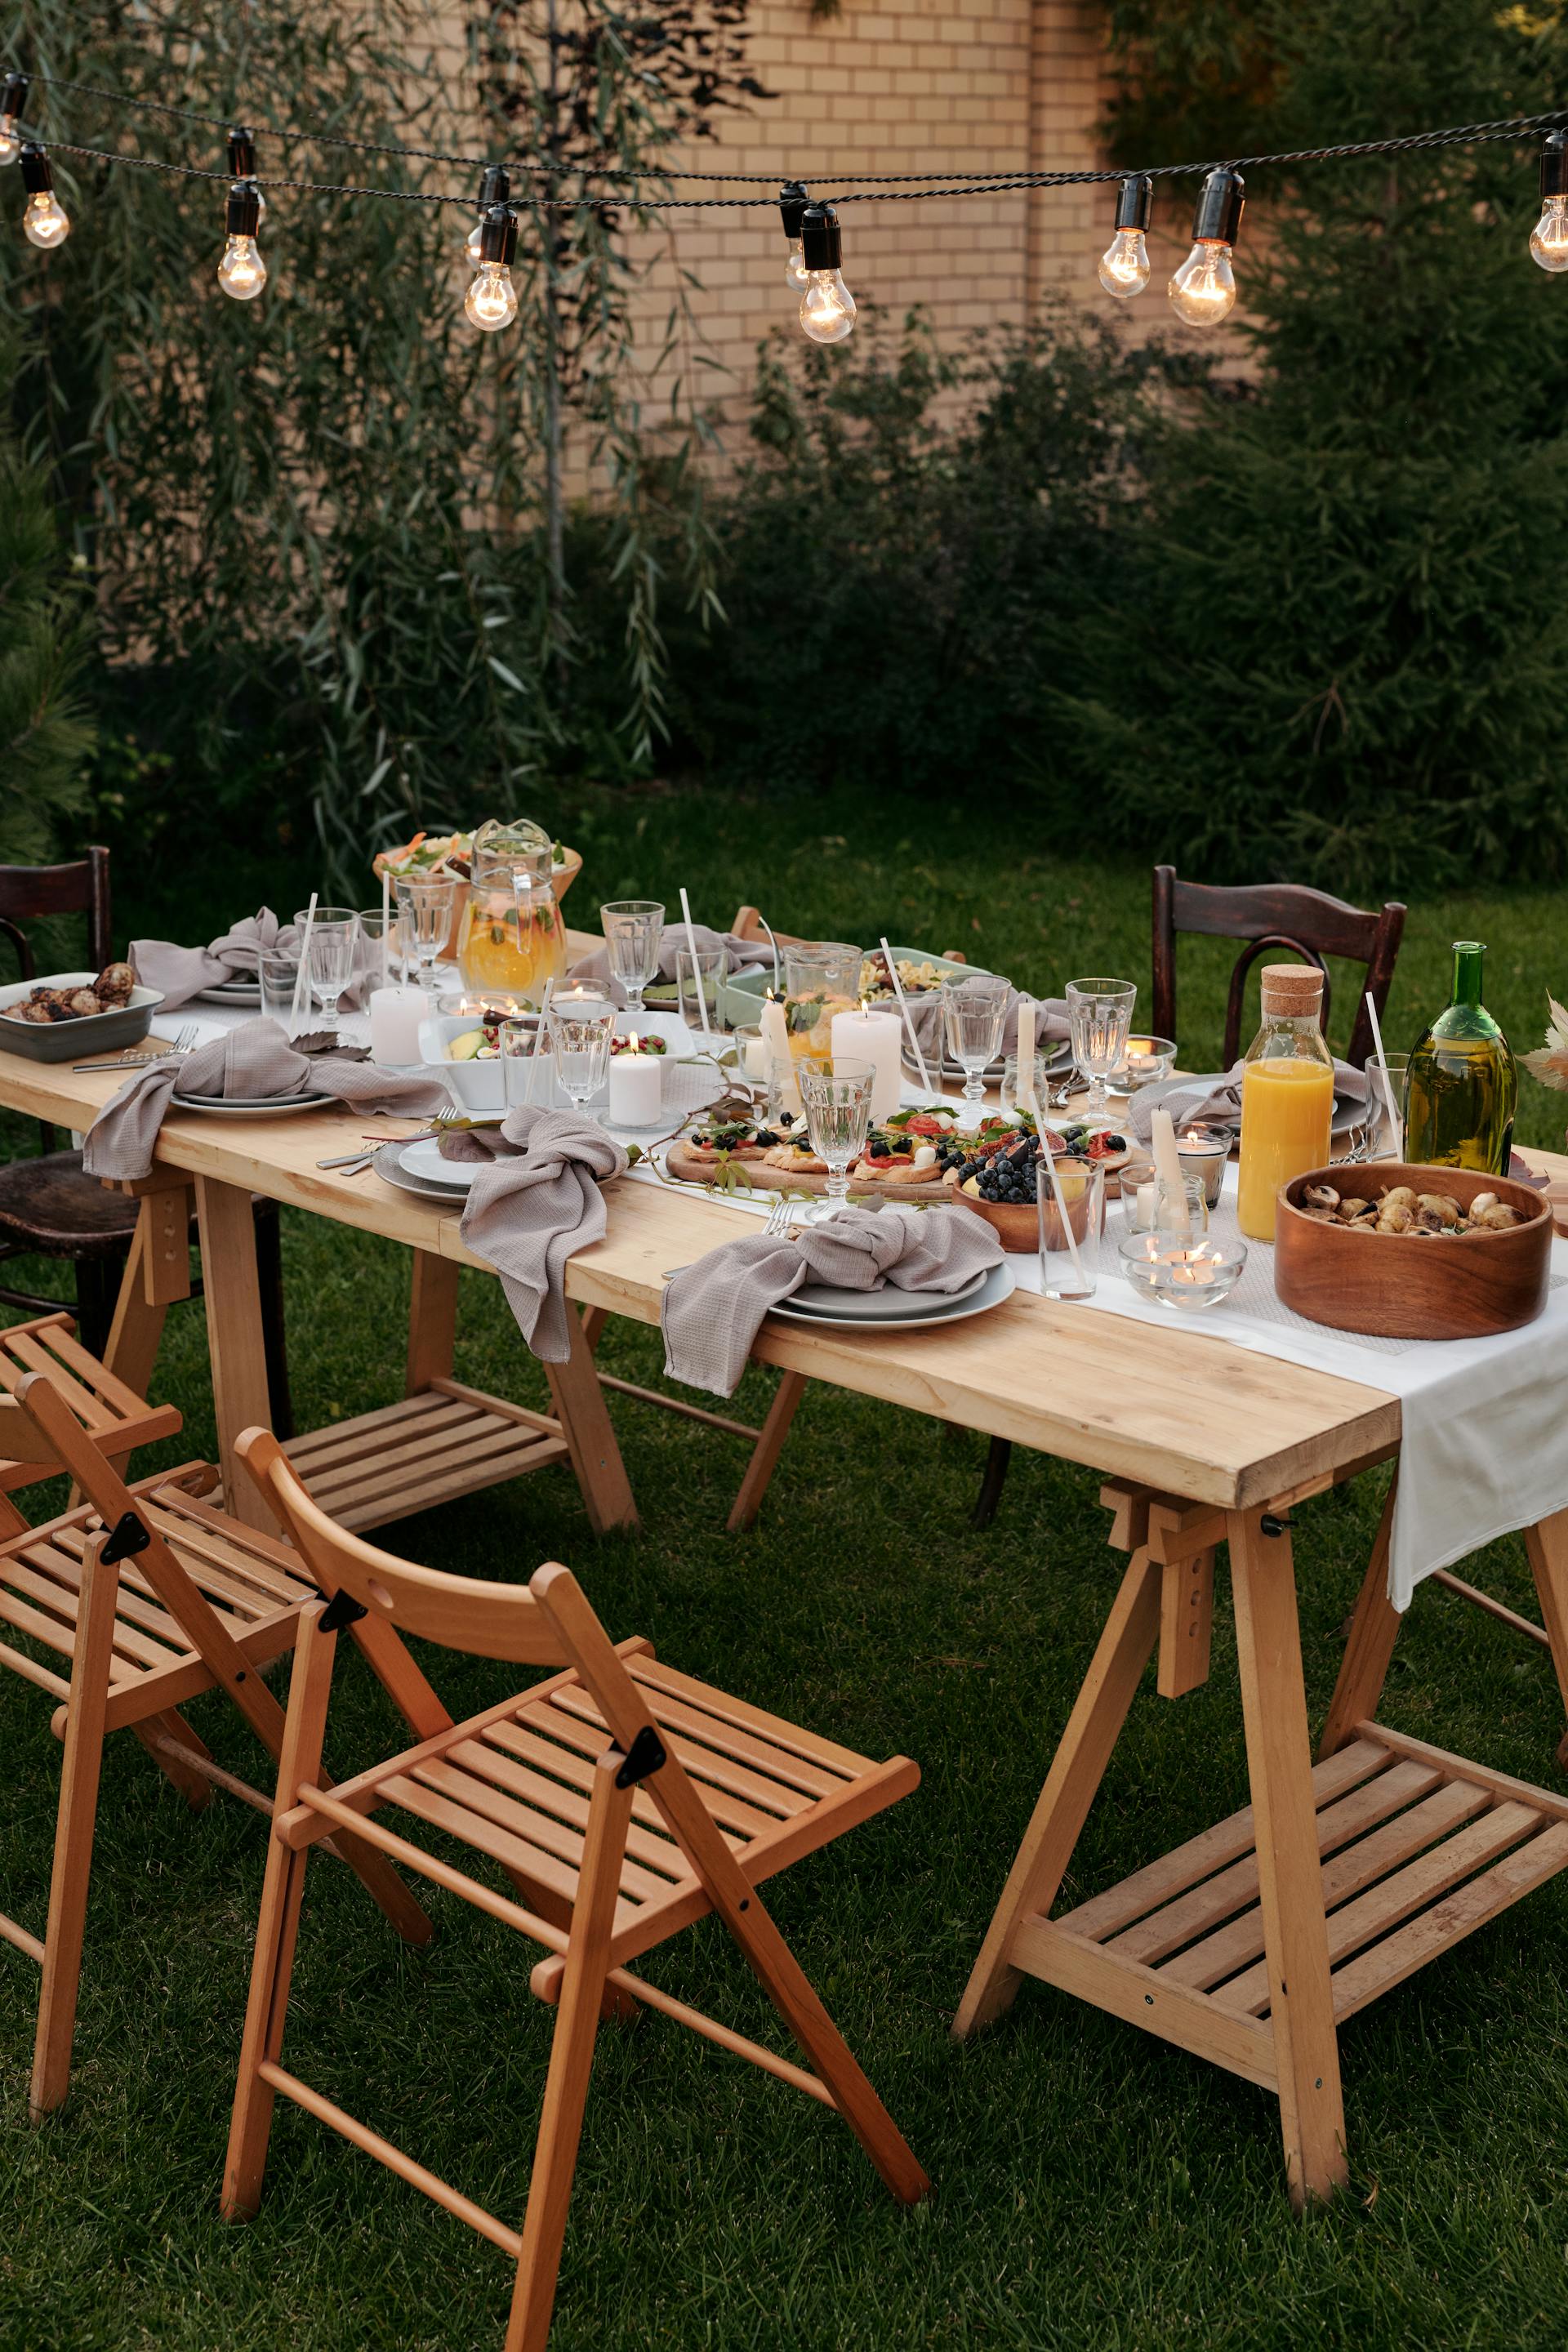 An outdoor dinner setting | Source: Pexels